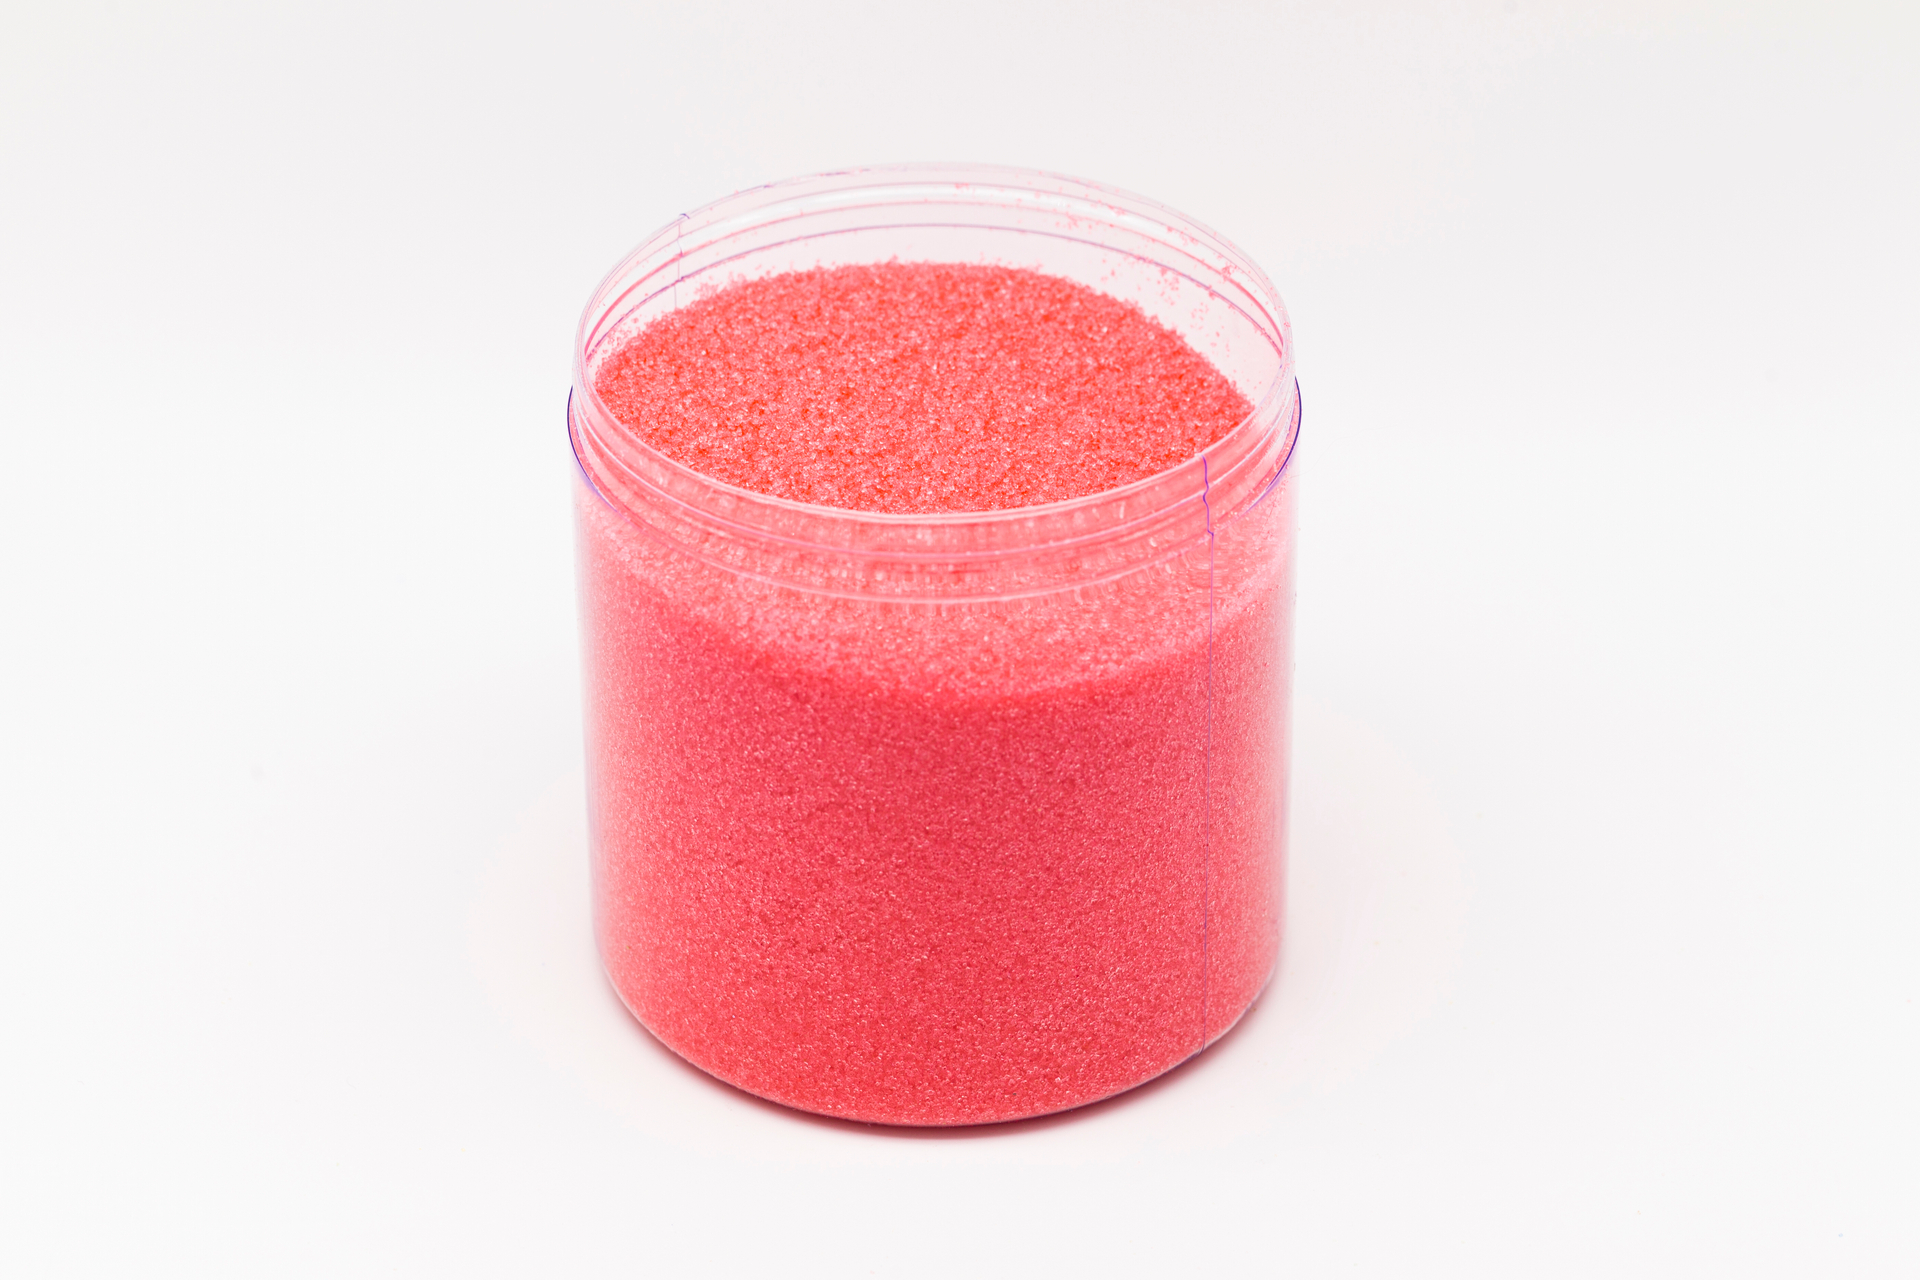 Algodón Azúcar aroma Fresa T3700 – Algodon de Azucar